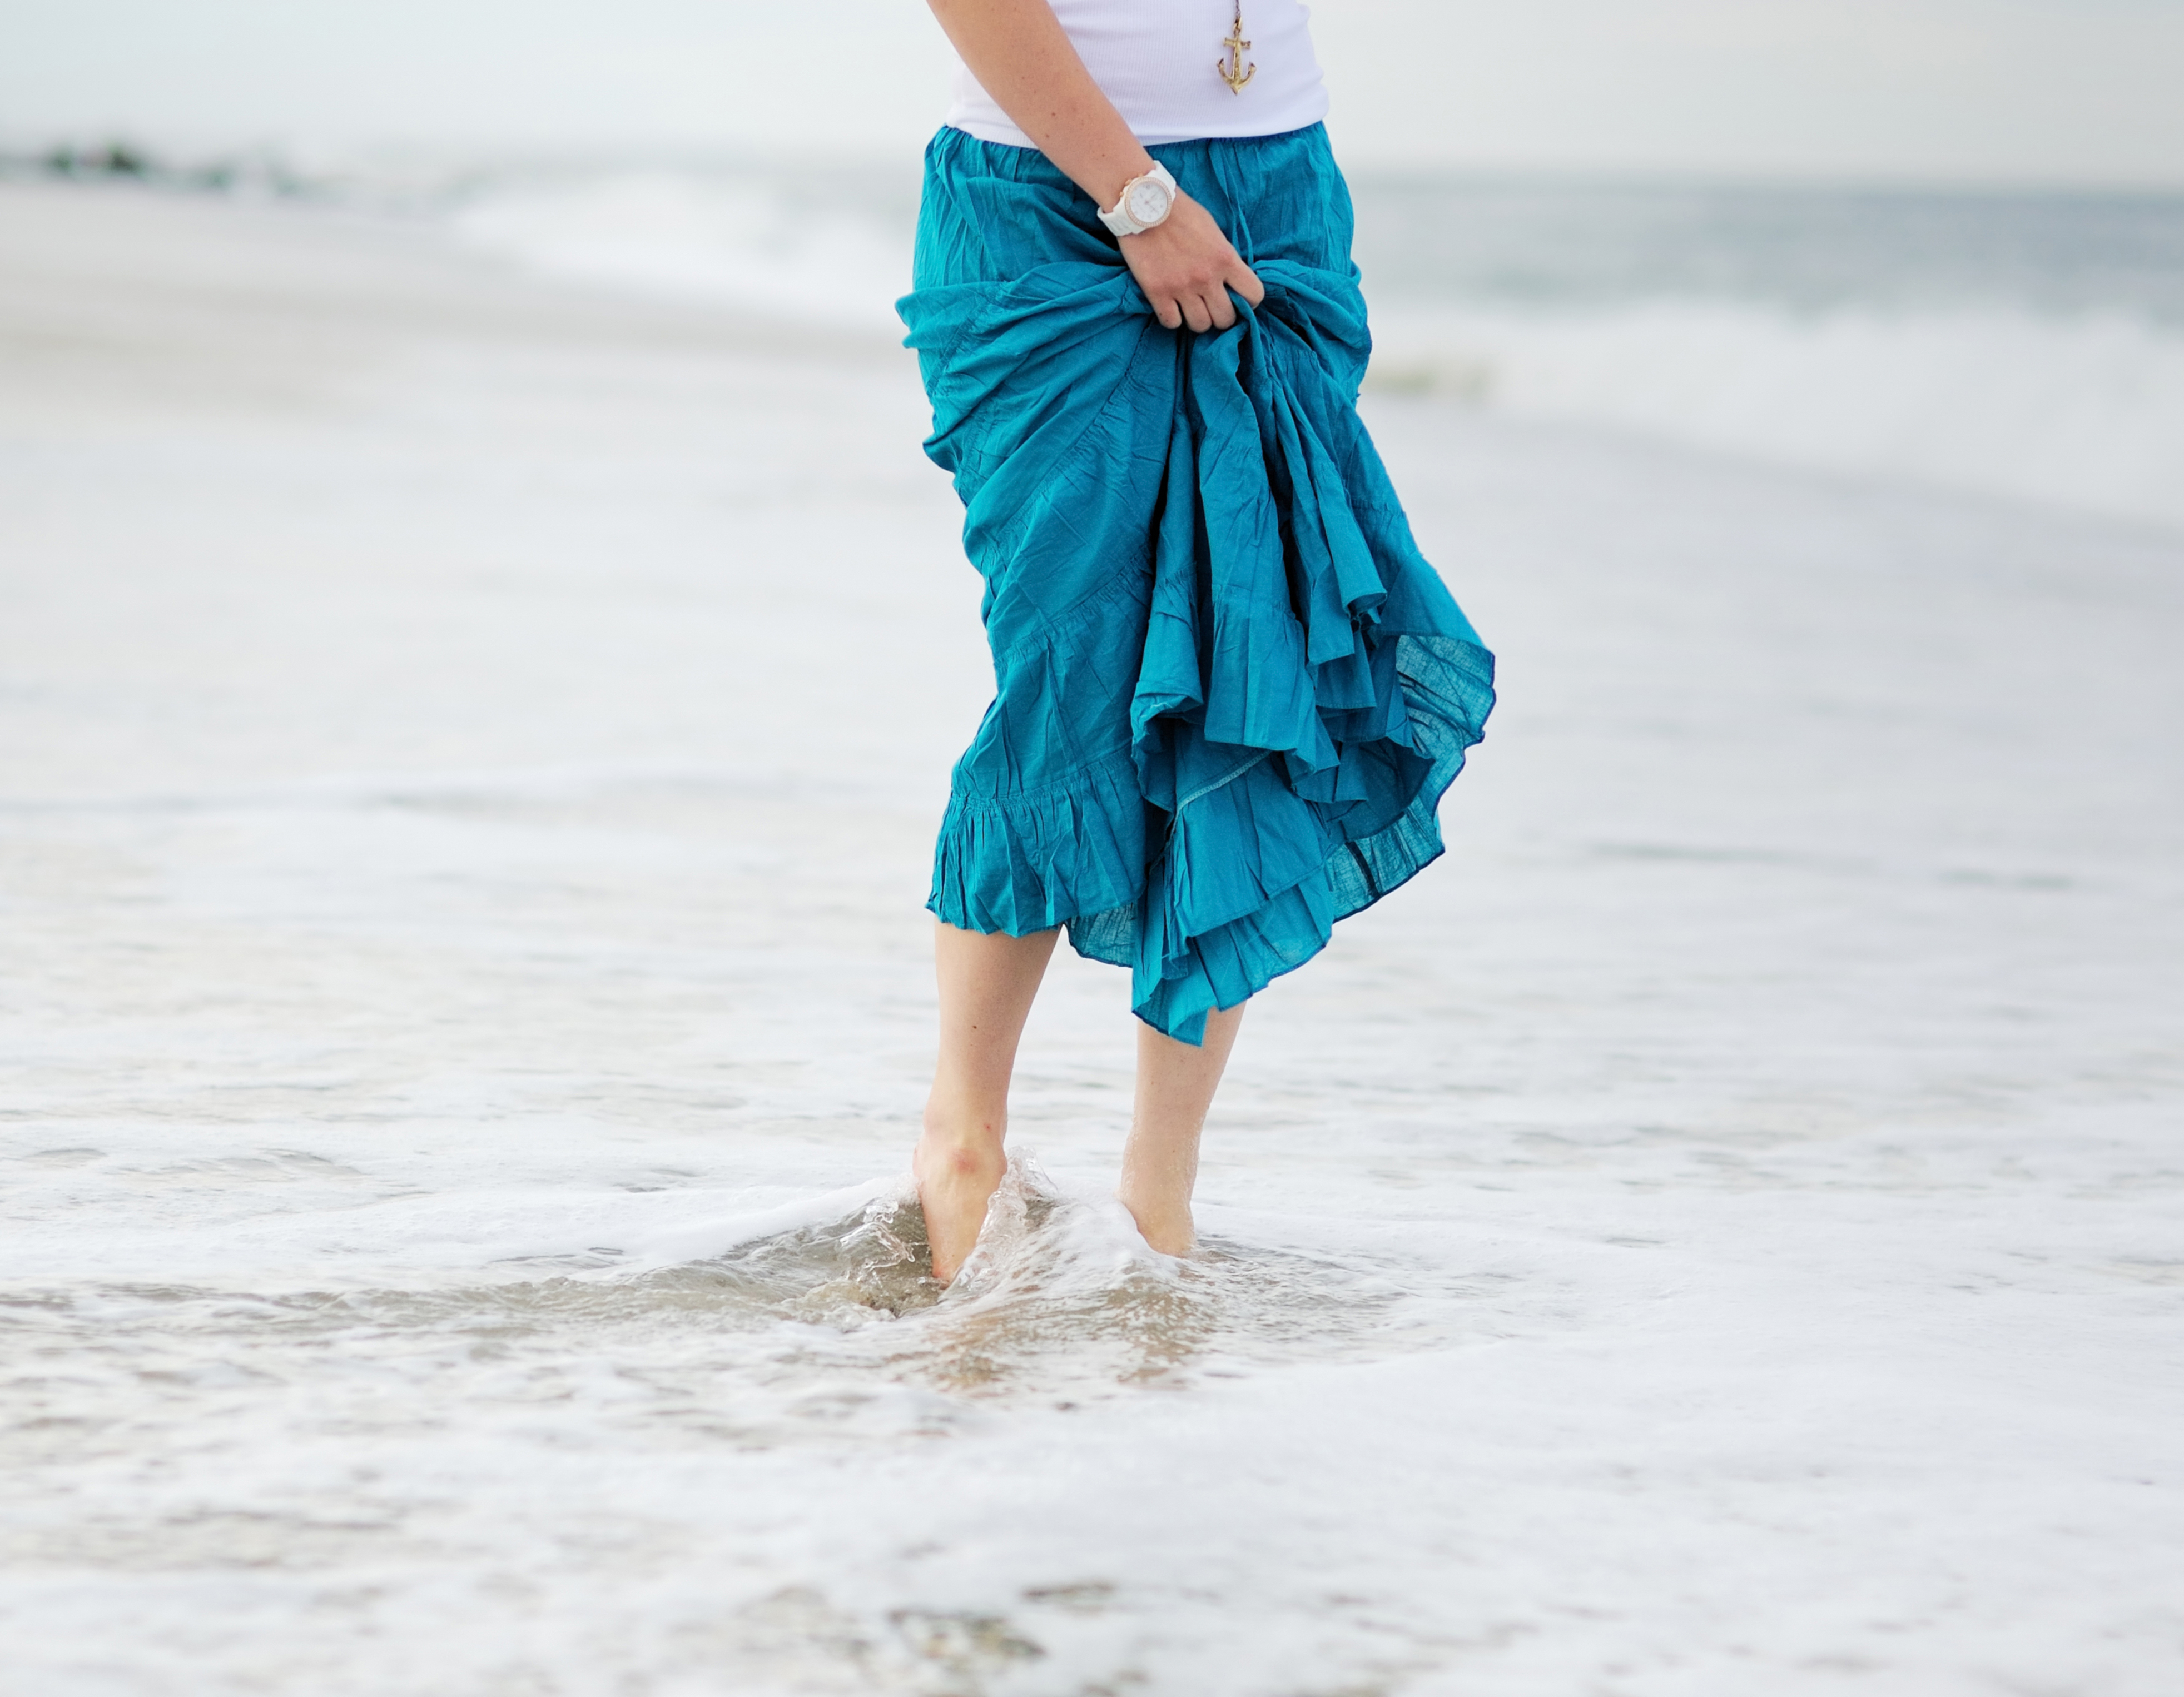 walk barefoot in wet sand